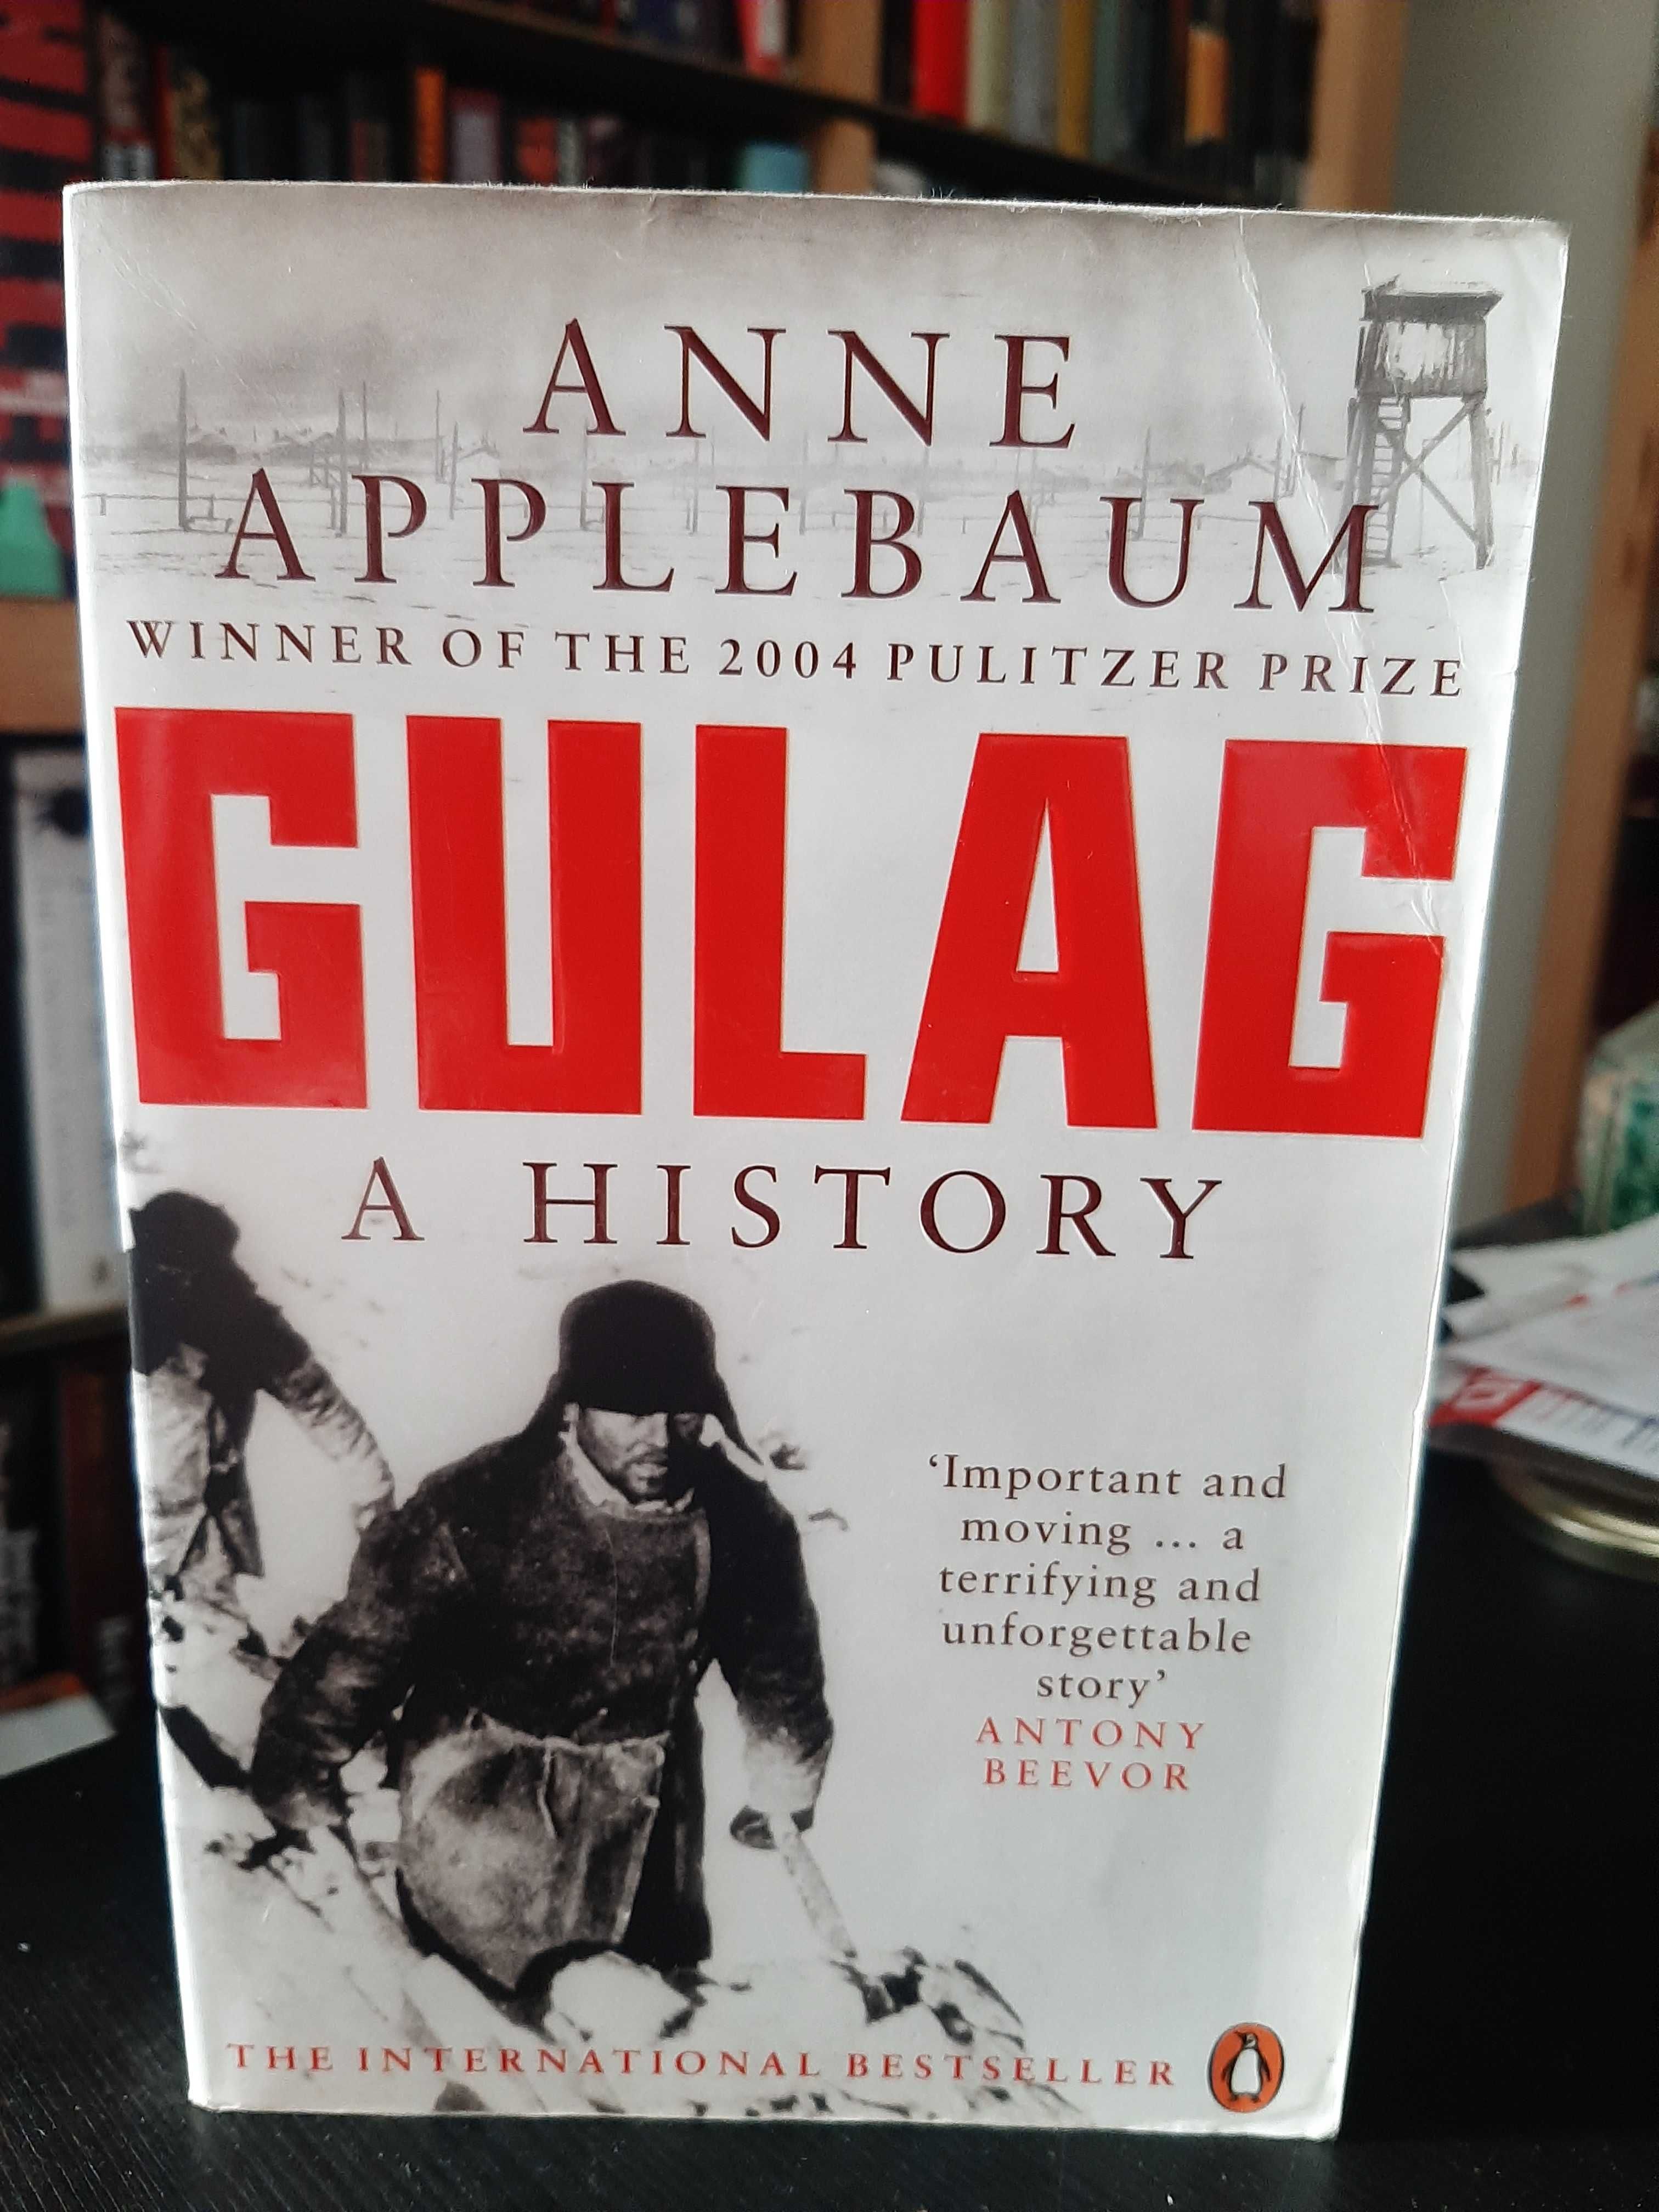 Anne Applebaum – Gulag: A History